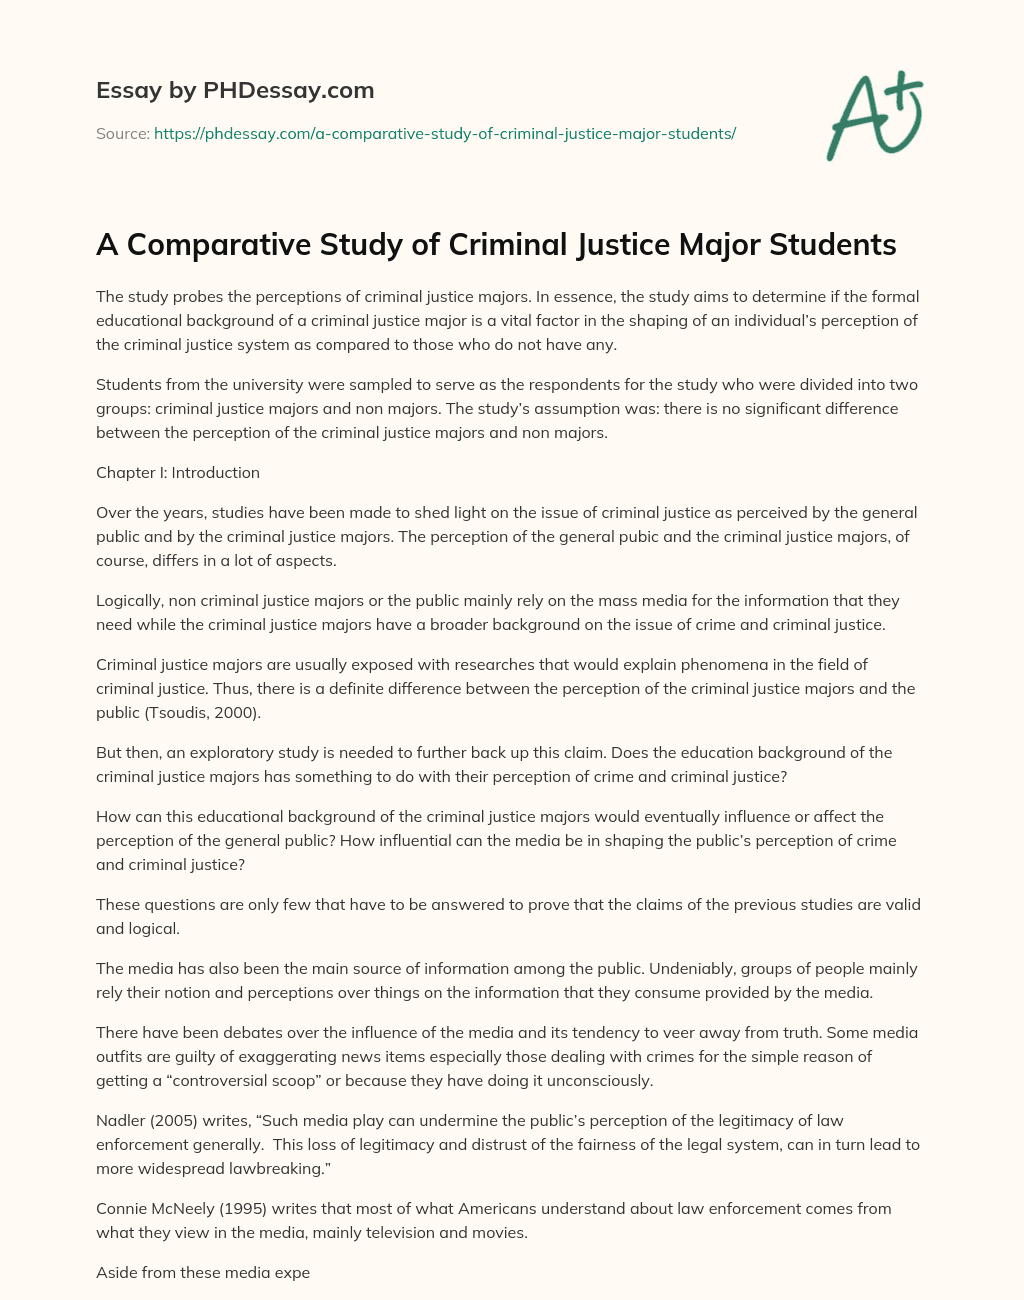 A Comparative Study of Criminal Justice Major Students essay